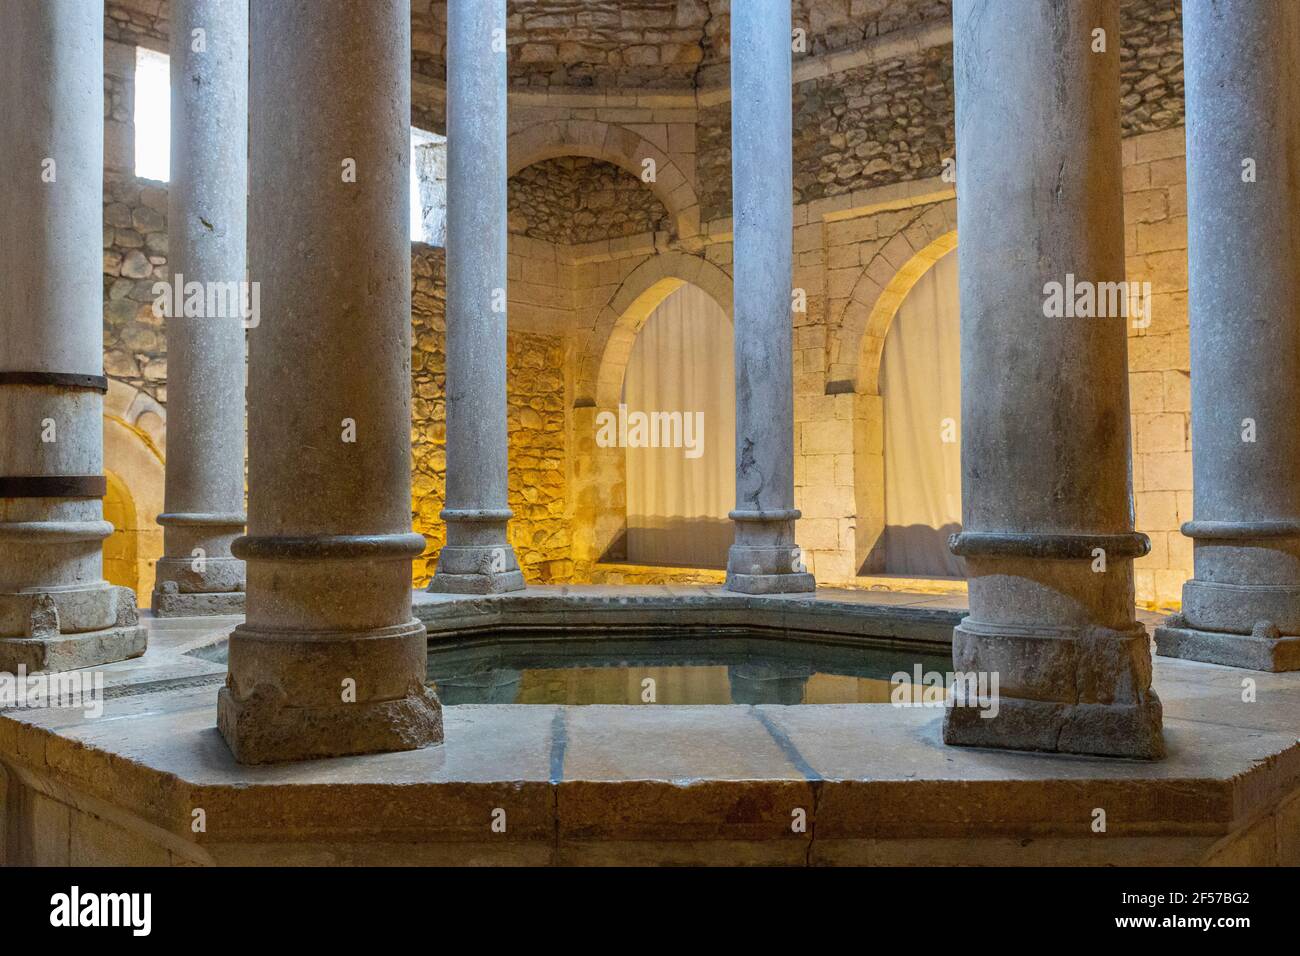 Ancient arabic and roman bath with columns in Girona, Catalonia Spain Stock Photo